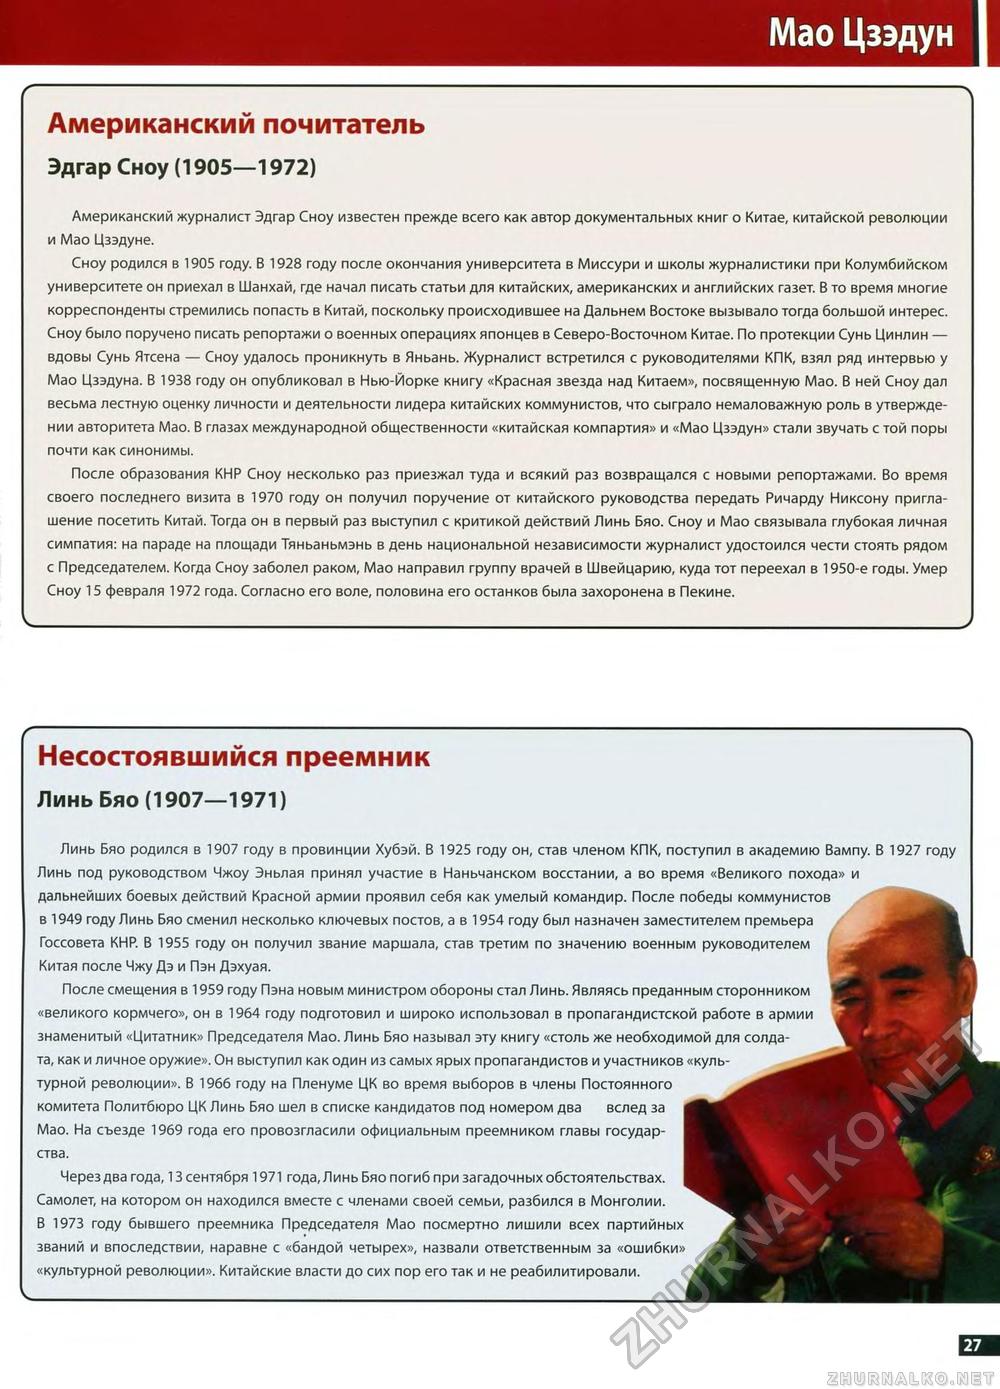 80. Мао Цзэдун, страница 27